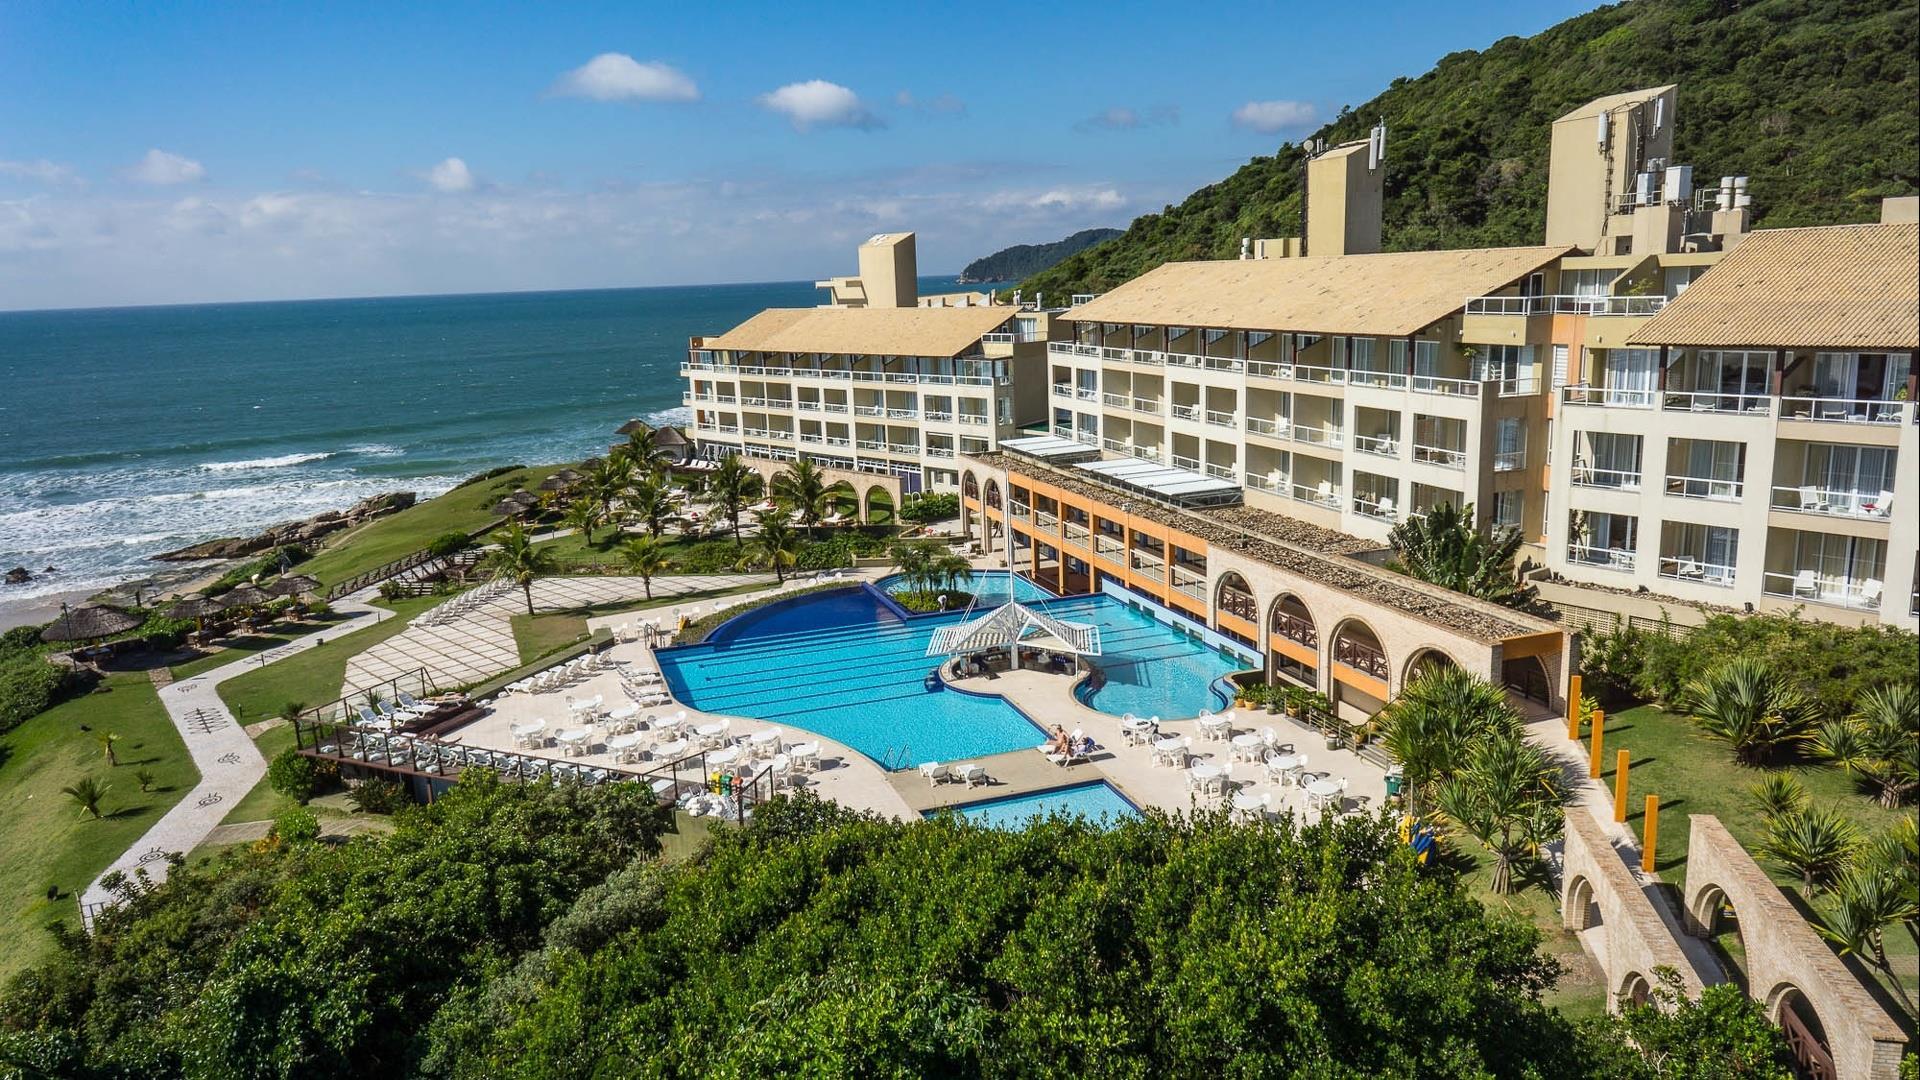 Brazil Florianopolis: Deluxe Hotel - Hotel Resort Costao do Santinho